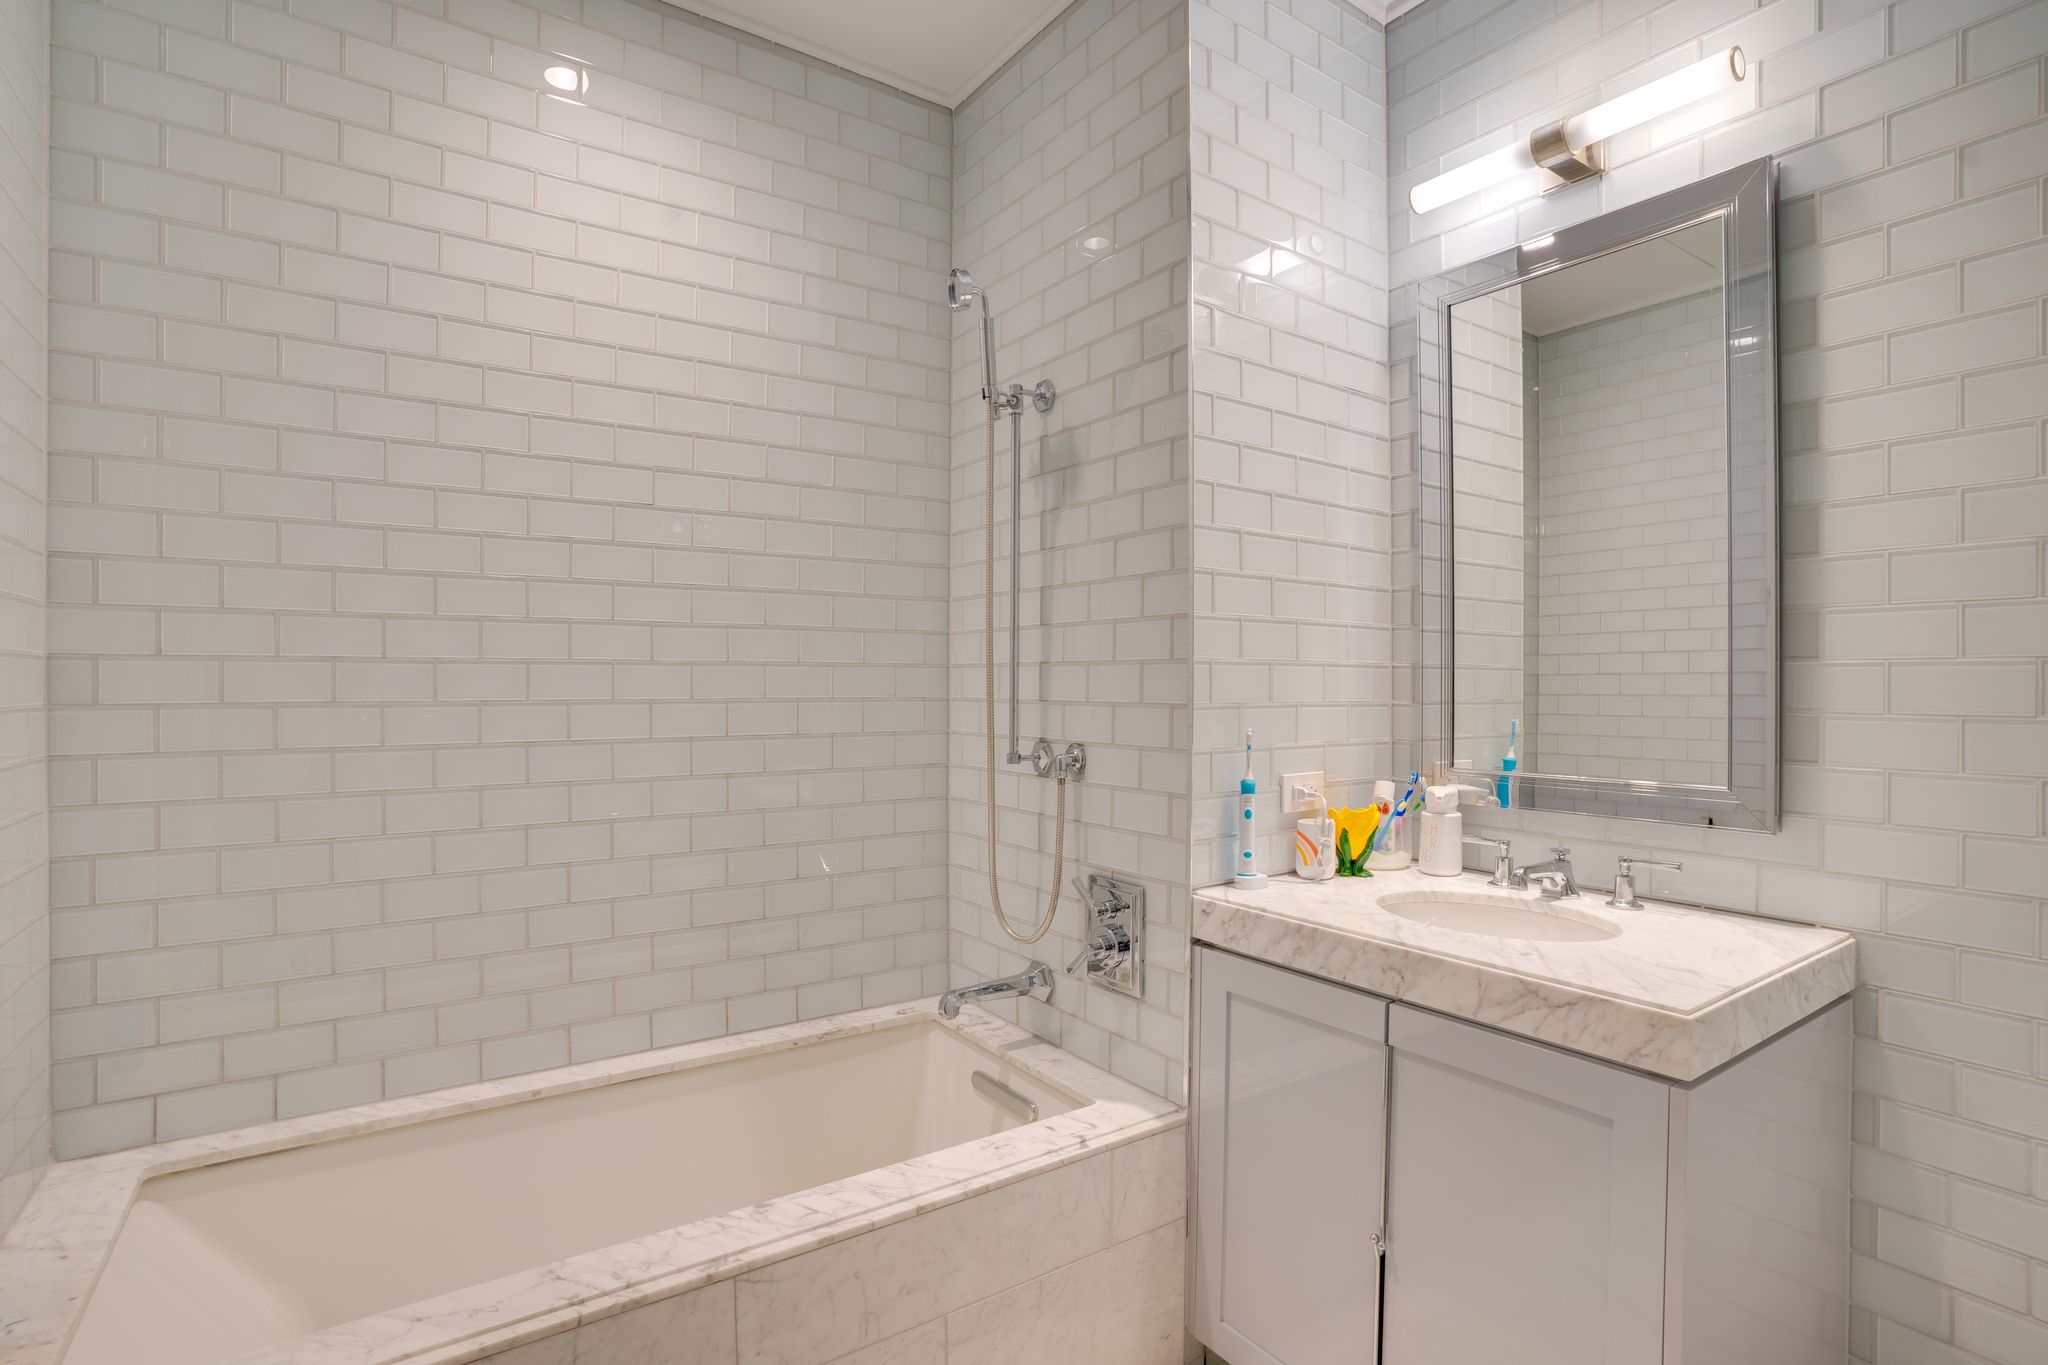 Bathroom Shower - Apartment Renovation | 301 East 80th, New York, NY